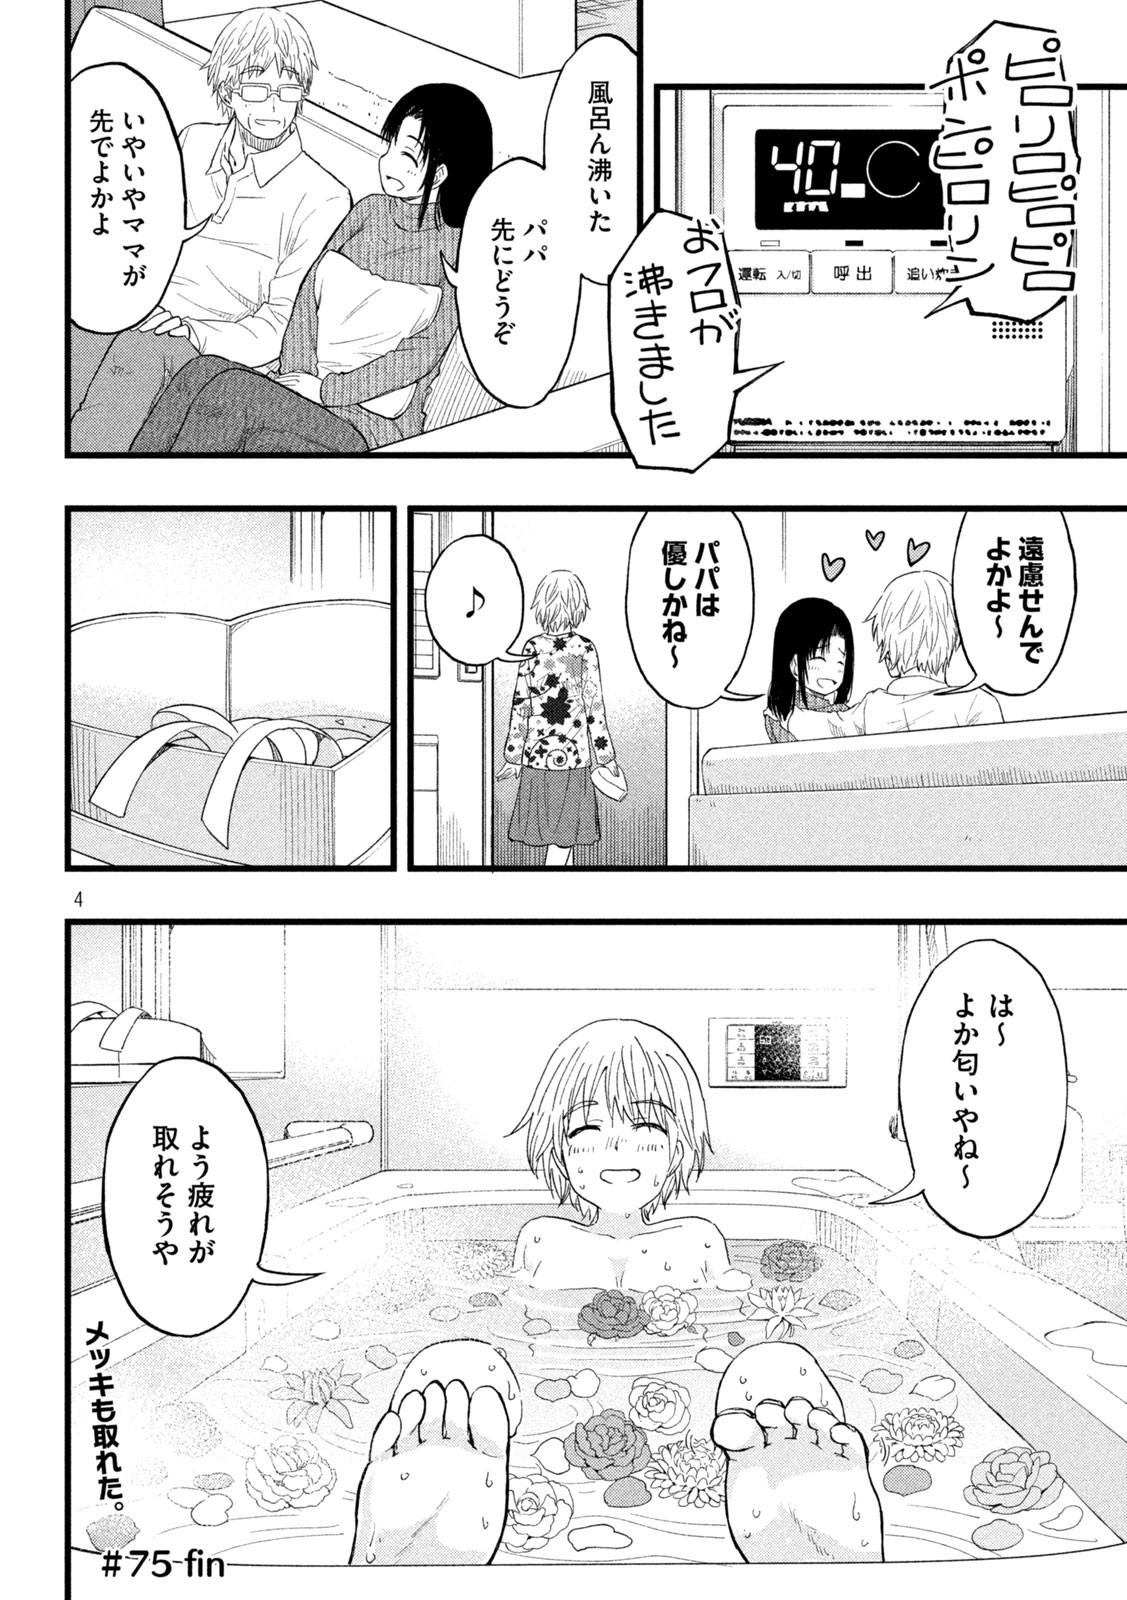 Koharu haru! - Chapter 75 - Page 4